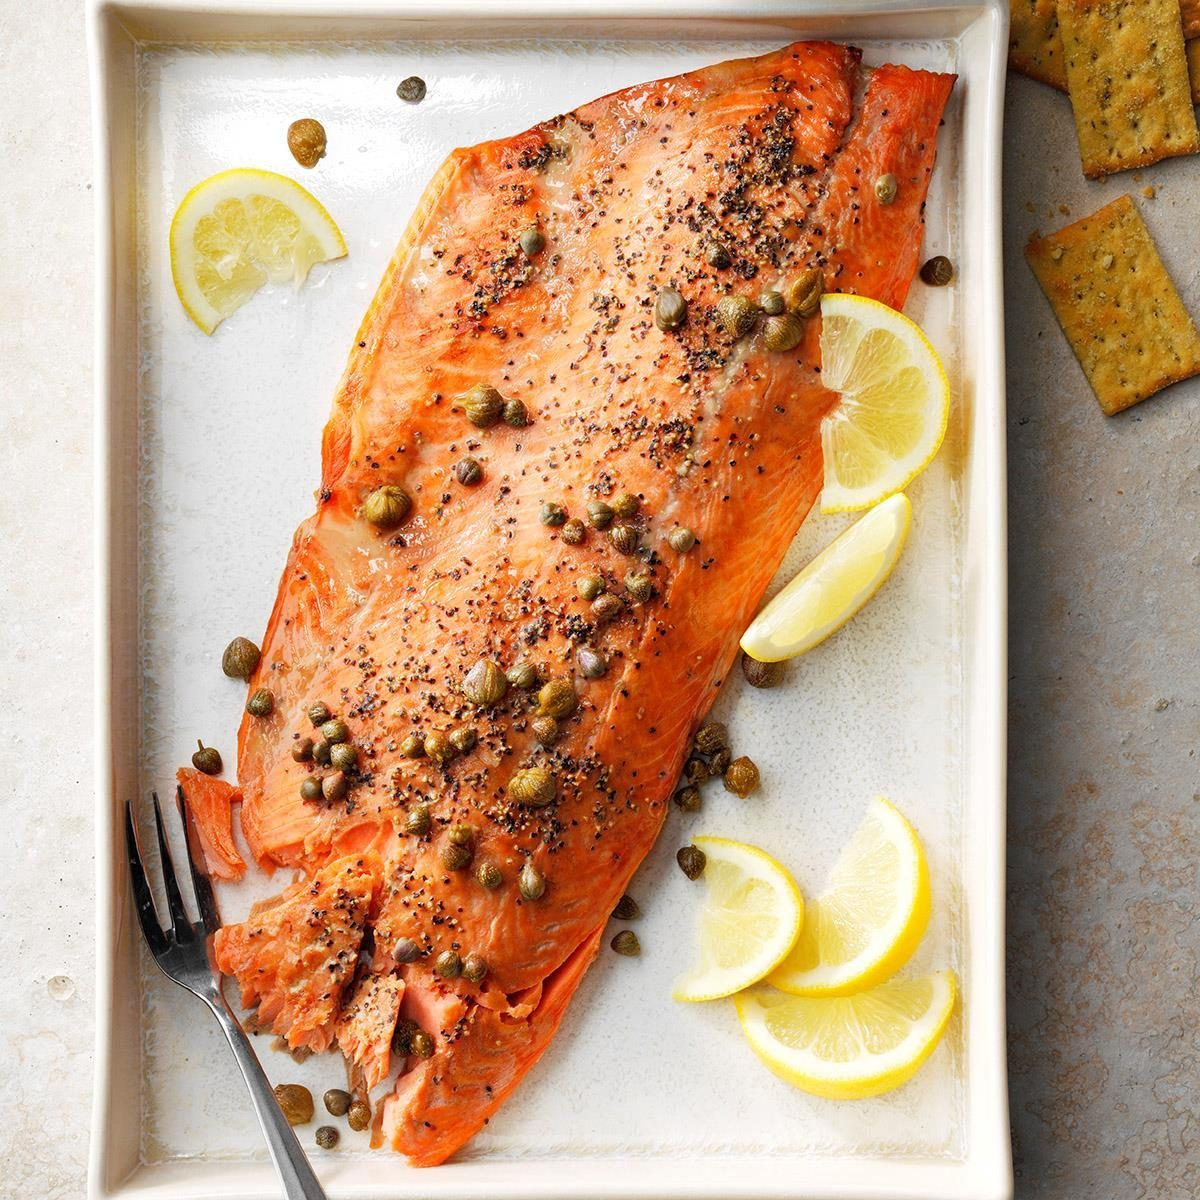 Make Smoked Salmon Lovely Easy Smoked Salmon Recipe How to Make It